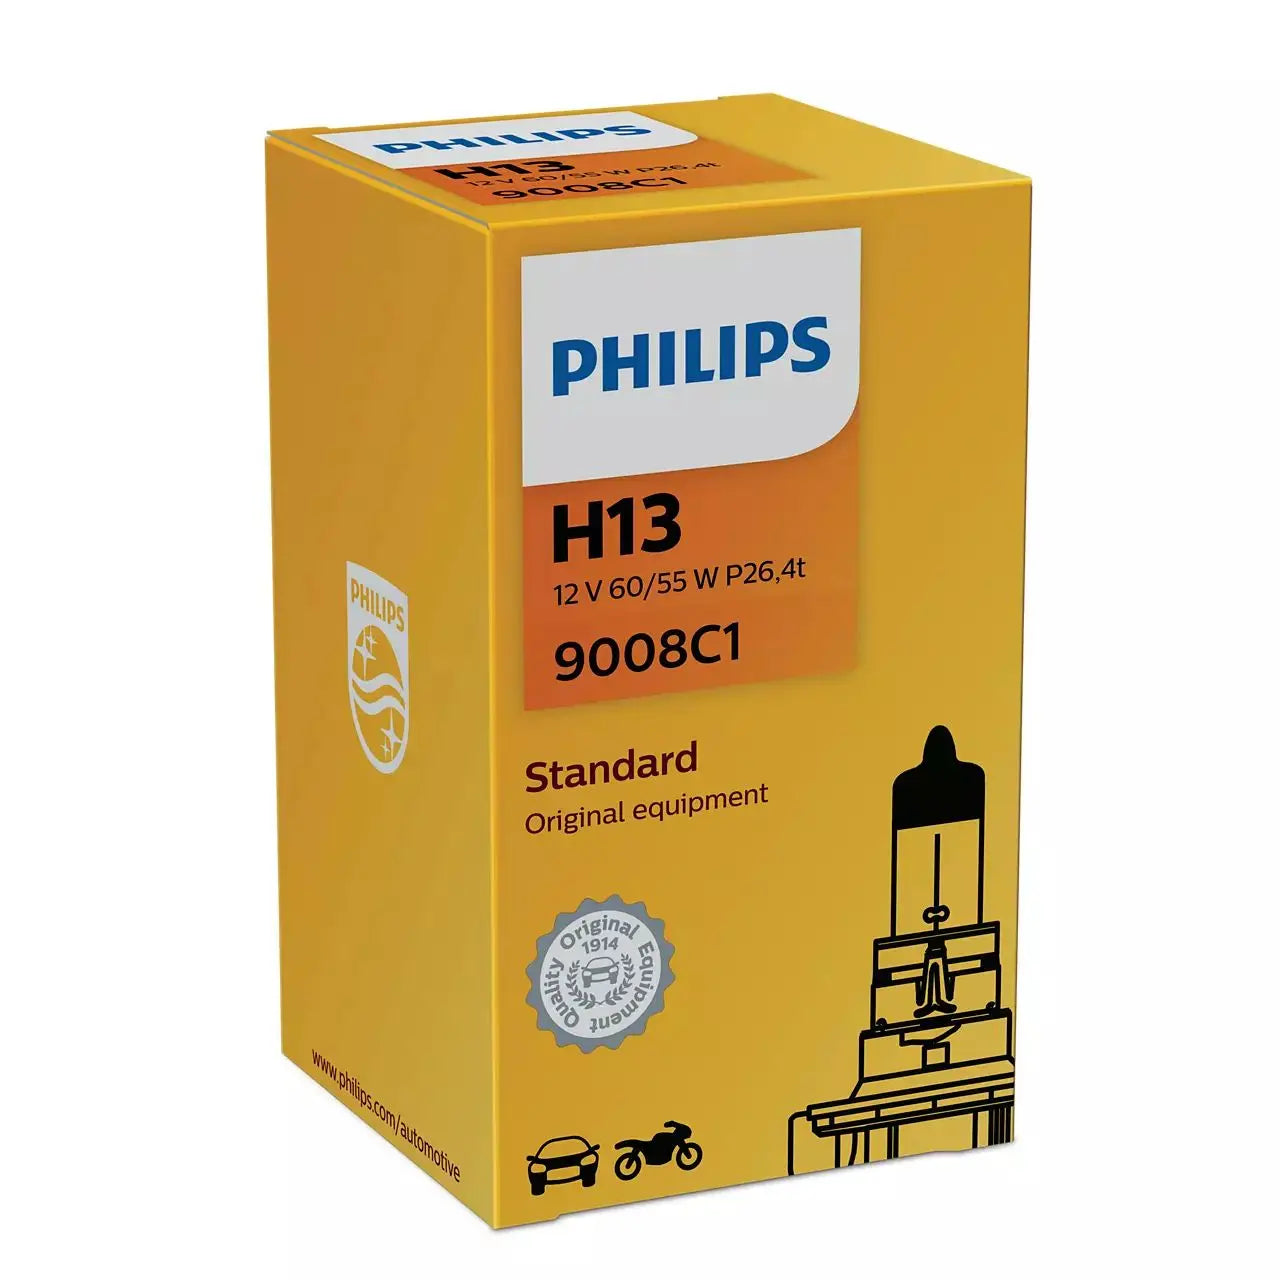 H13 12V 60/55W P26.4t Standard 1 St. Philips - Samsuns Group